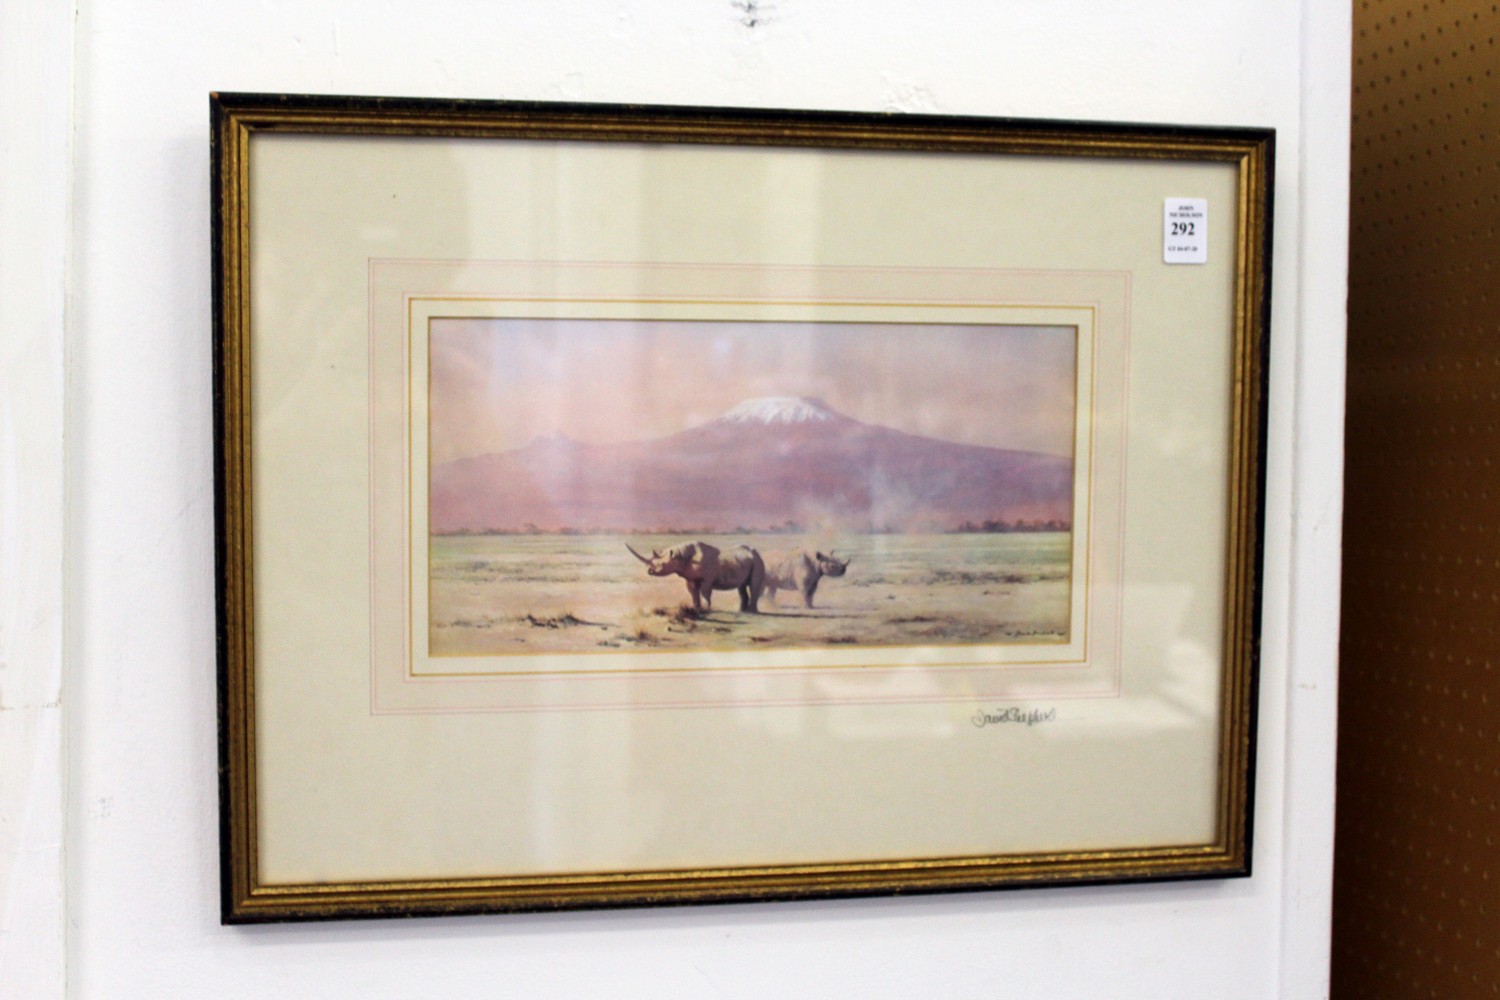 David Shepherd, a colour print of a rhinoceros, pencil signed.